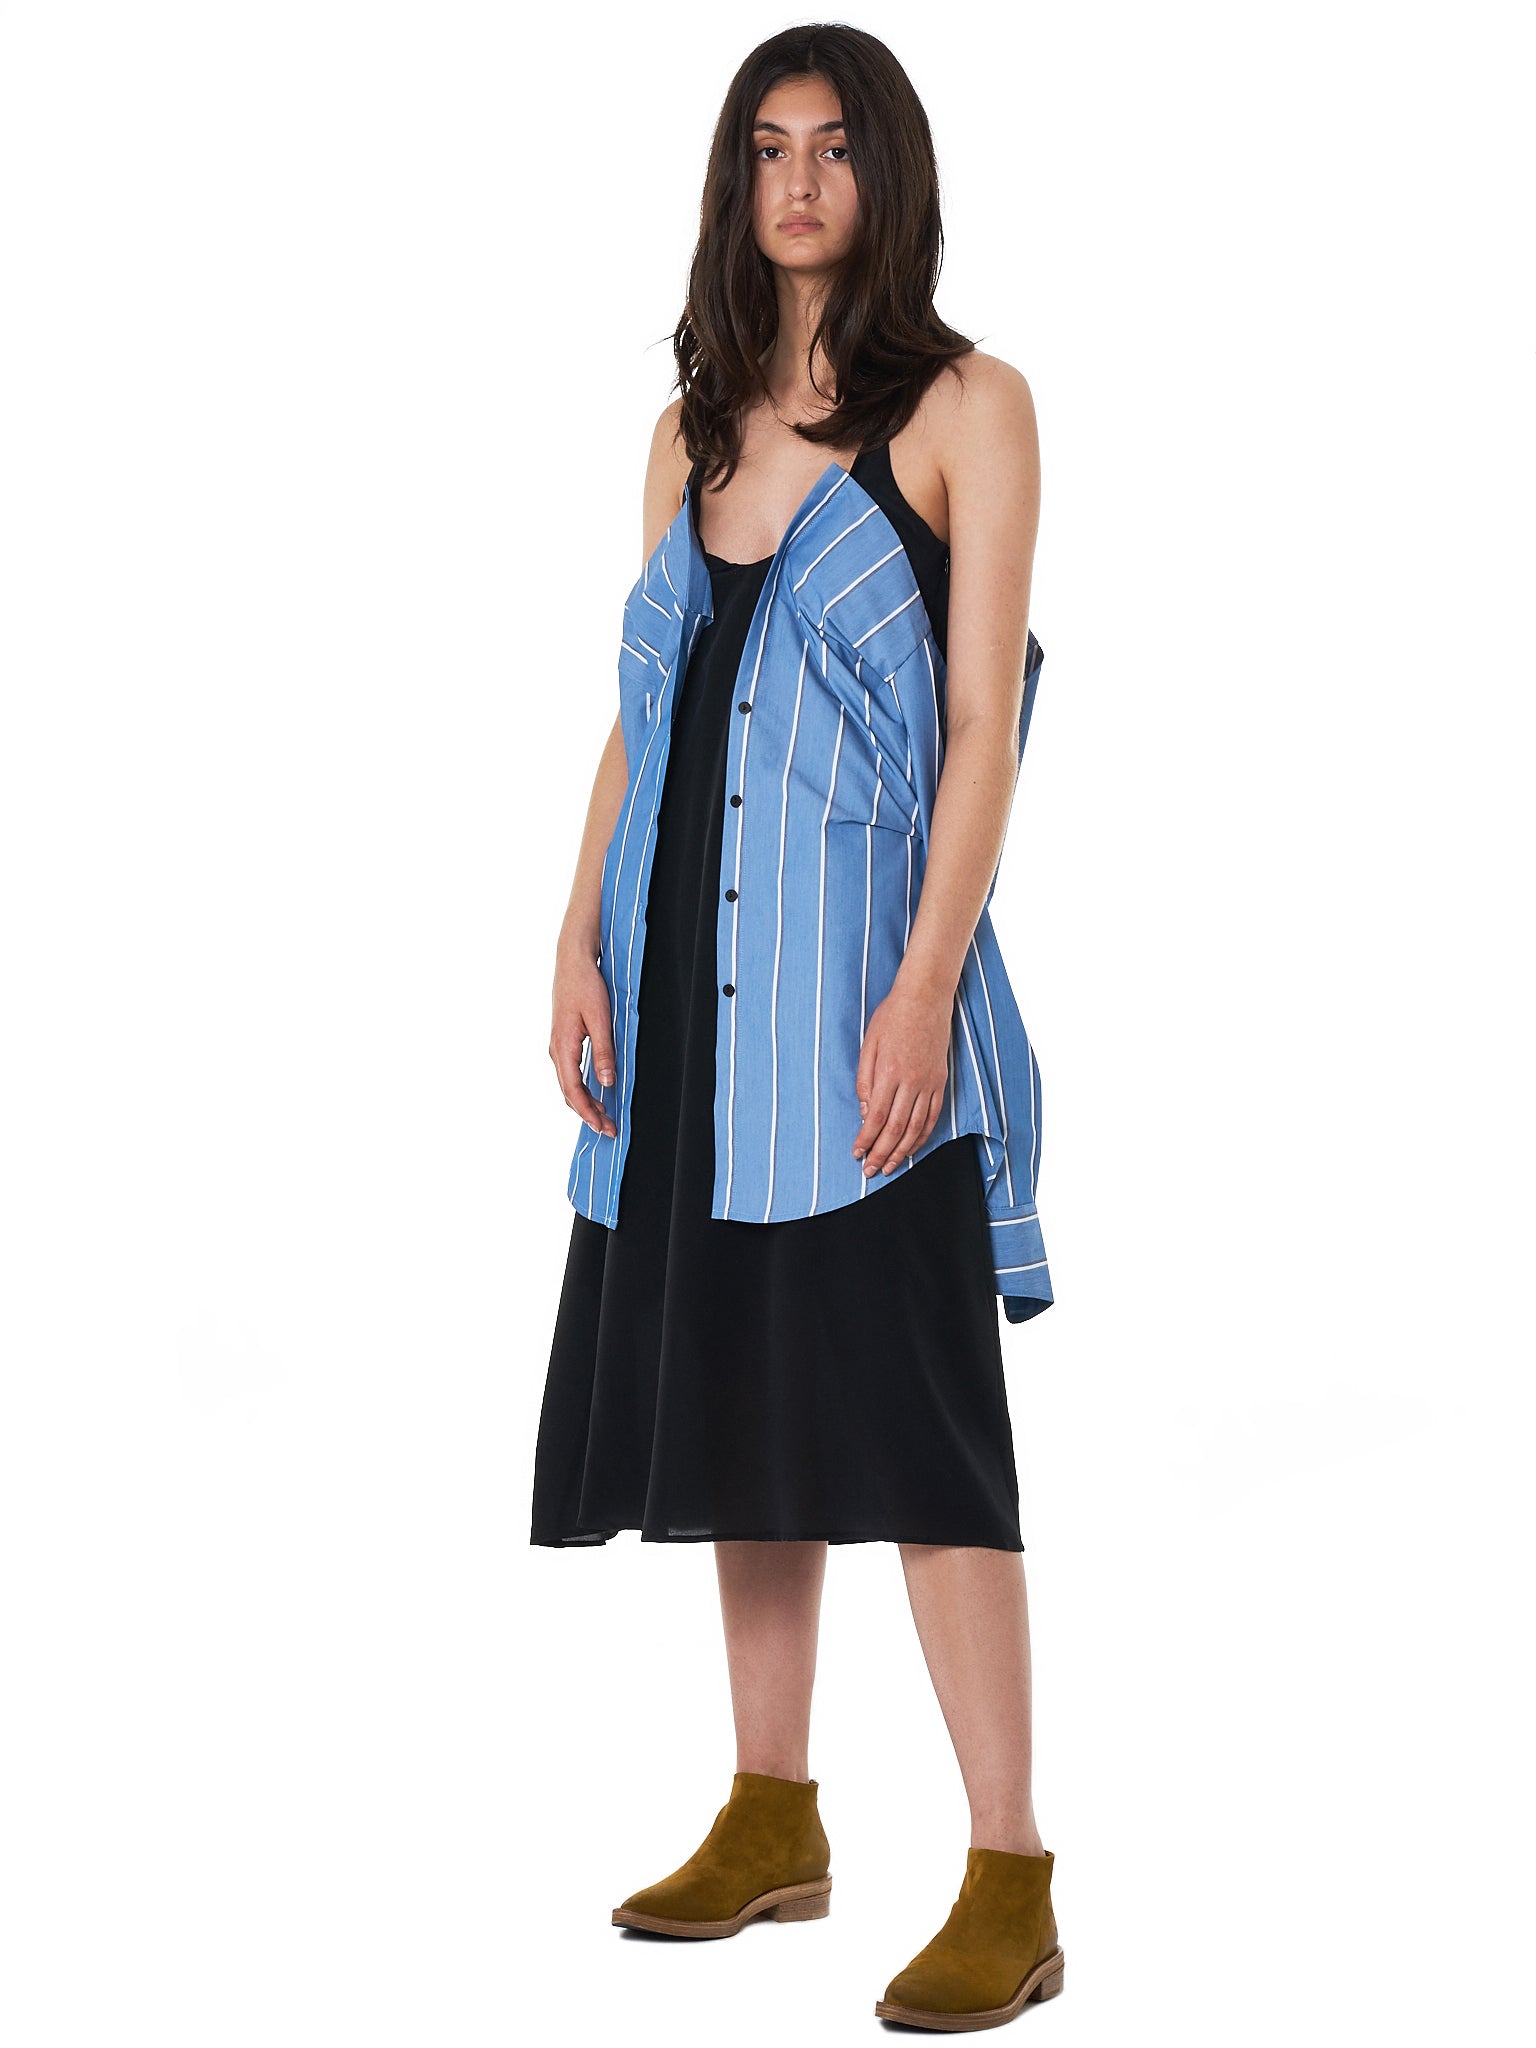 Hybrid Pixel Dress (SC13-WDRS-003-BLUE)